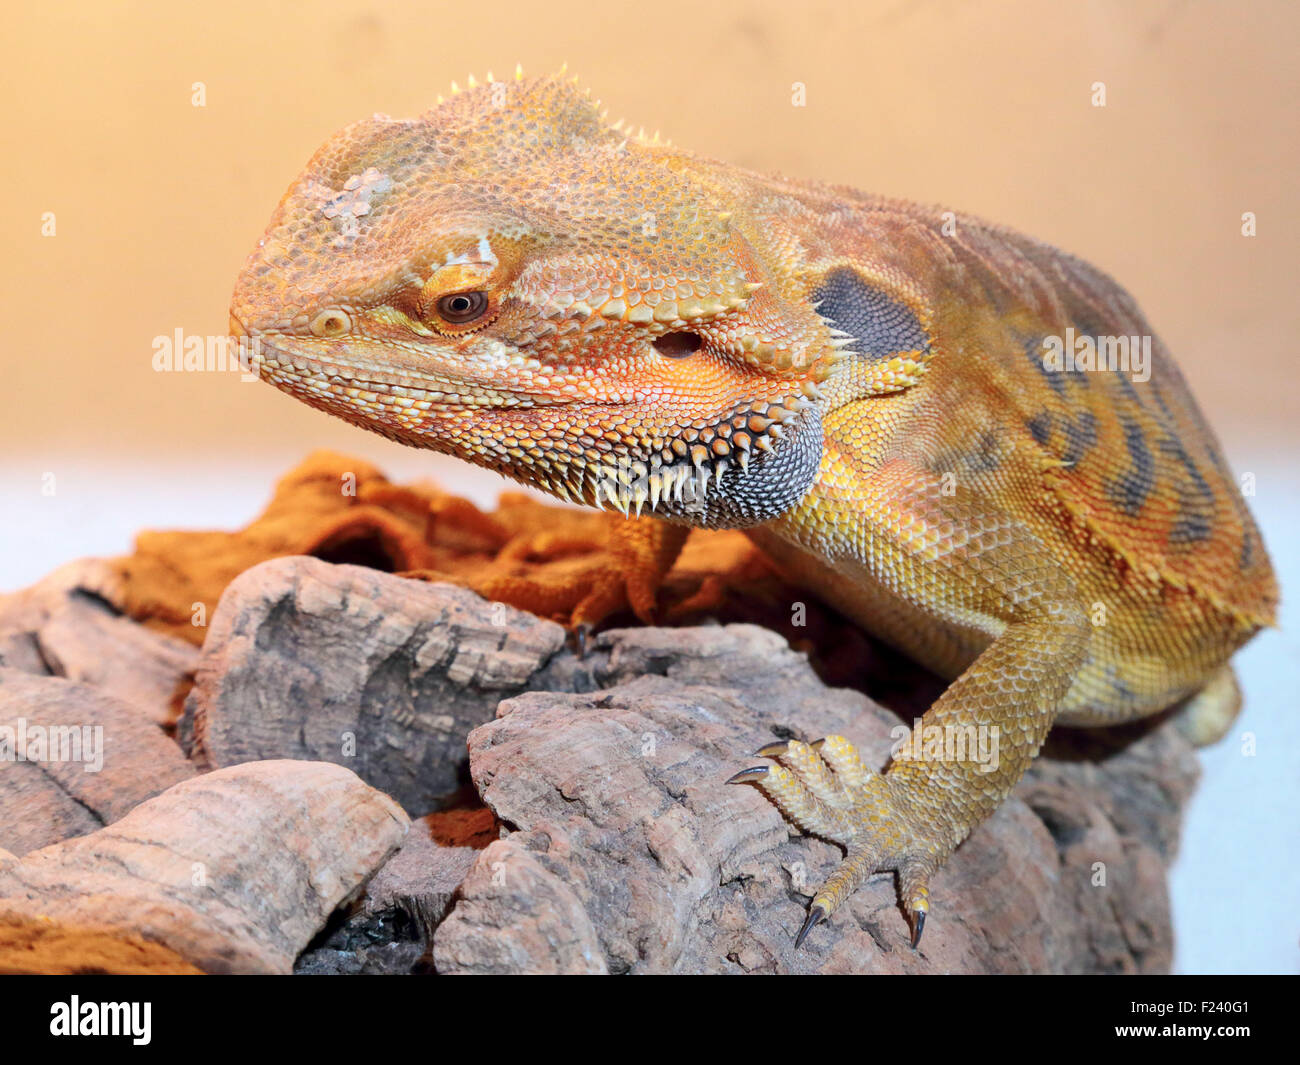 Adult bearded Dragon lizard basking on a cork bark Stock Photo